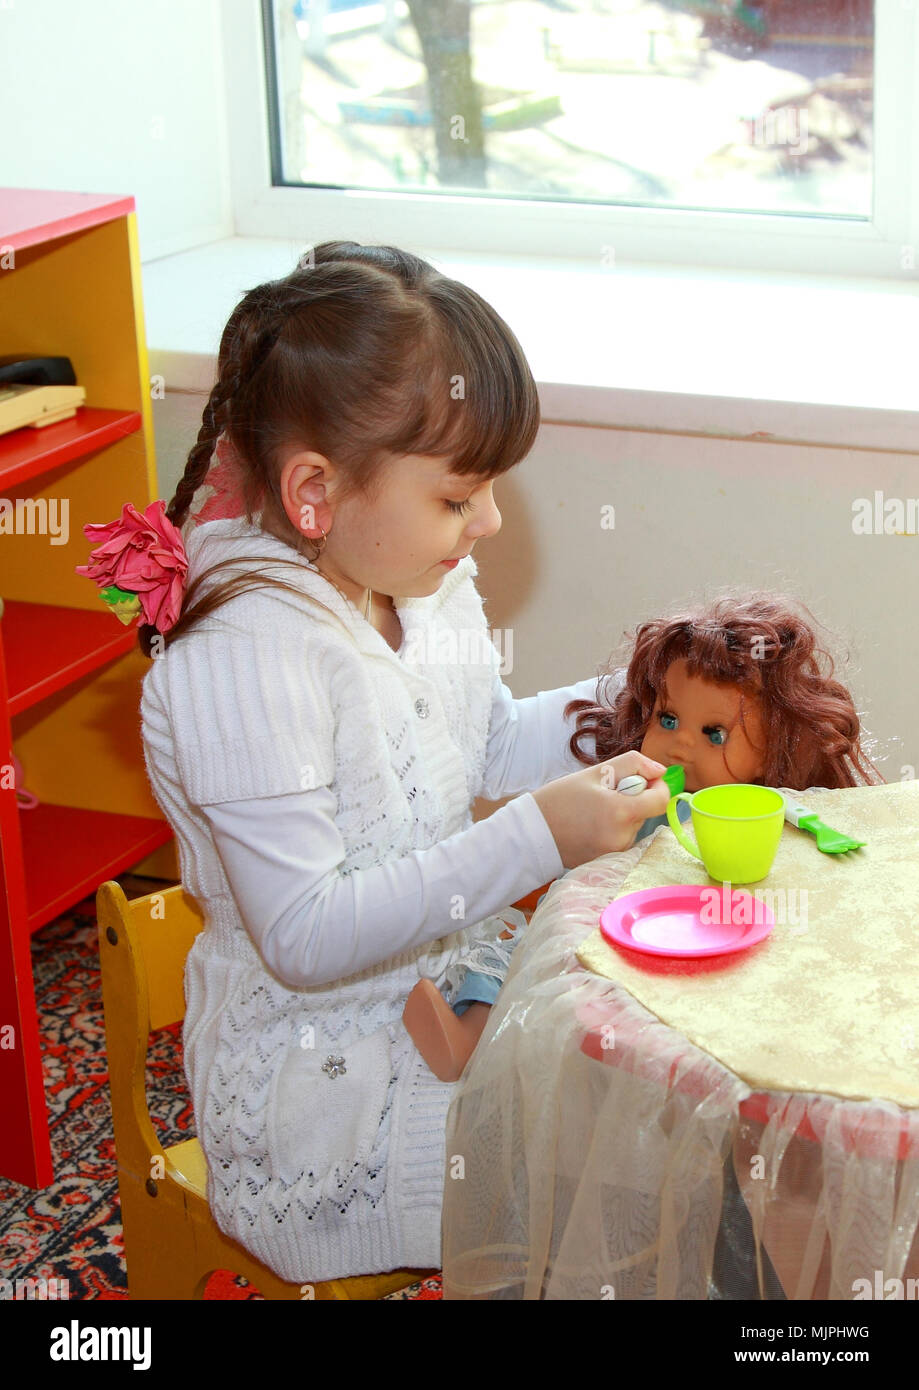 Child in kindergarten. The little girl feeds the doll. Stock Photo